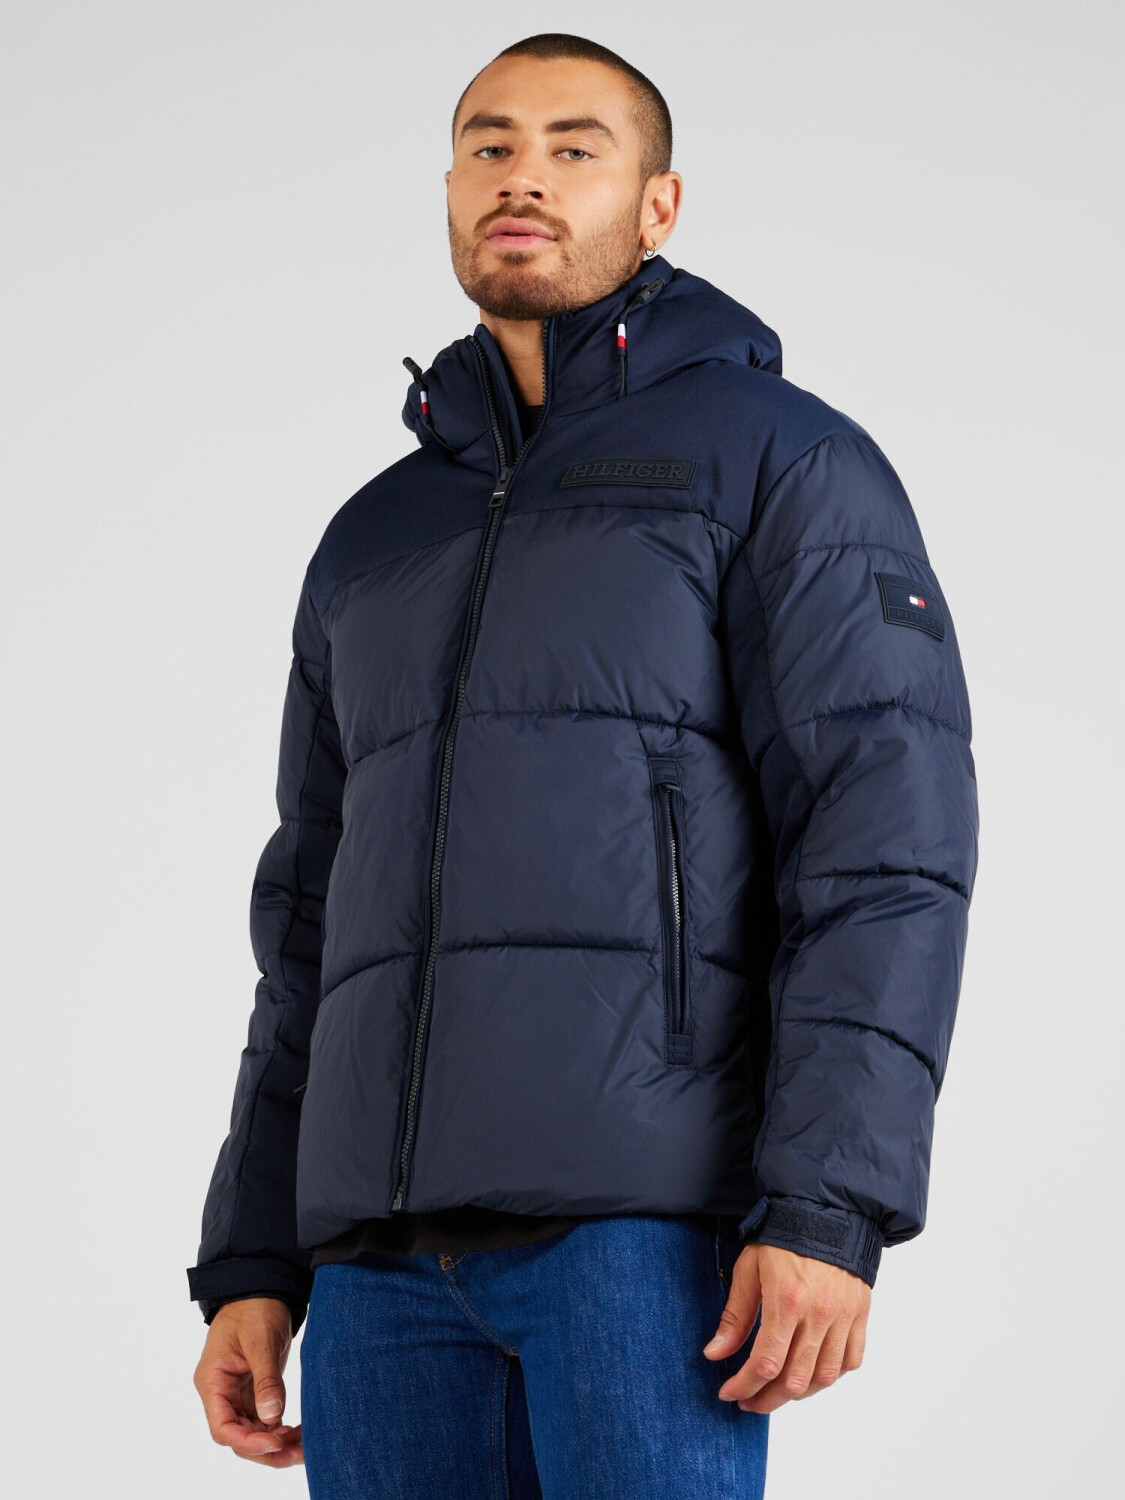 NWT Tommy Hilfiger Puffer Jacket Coats & - jackets